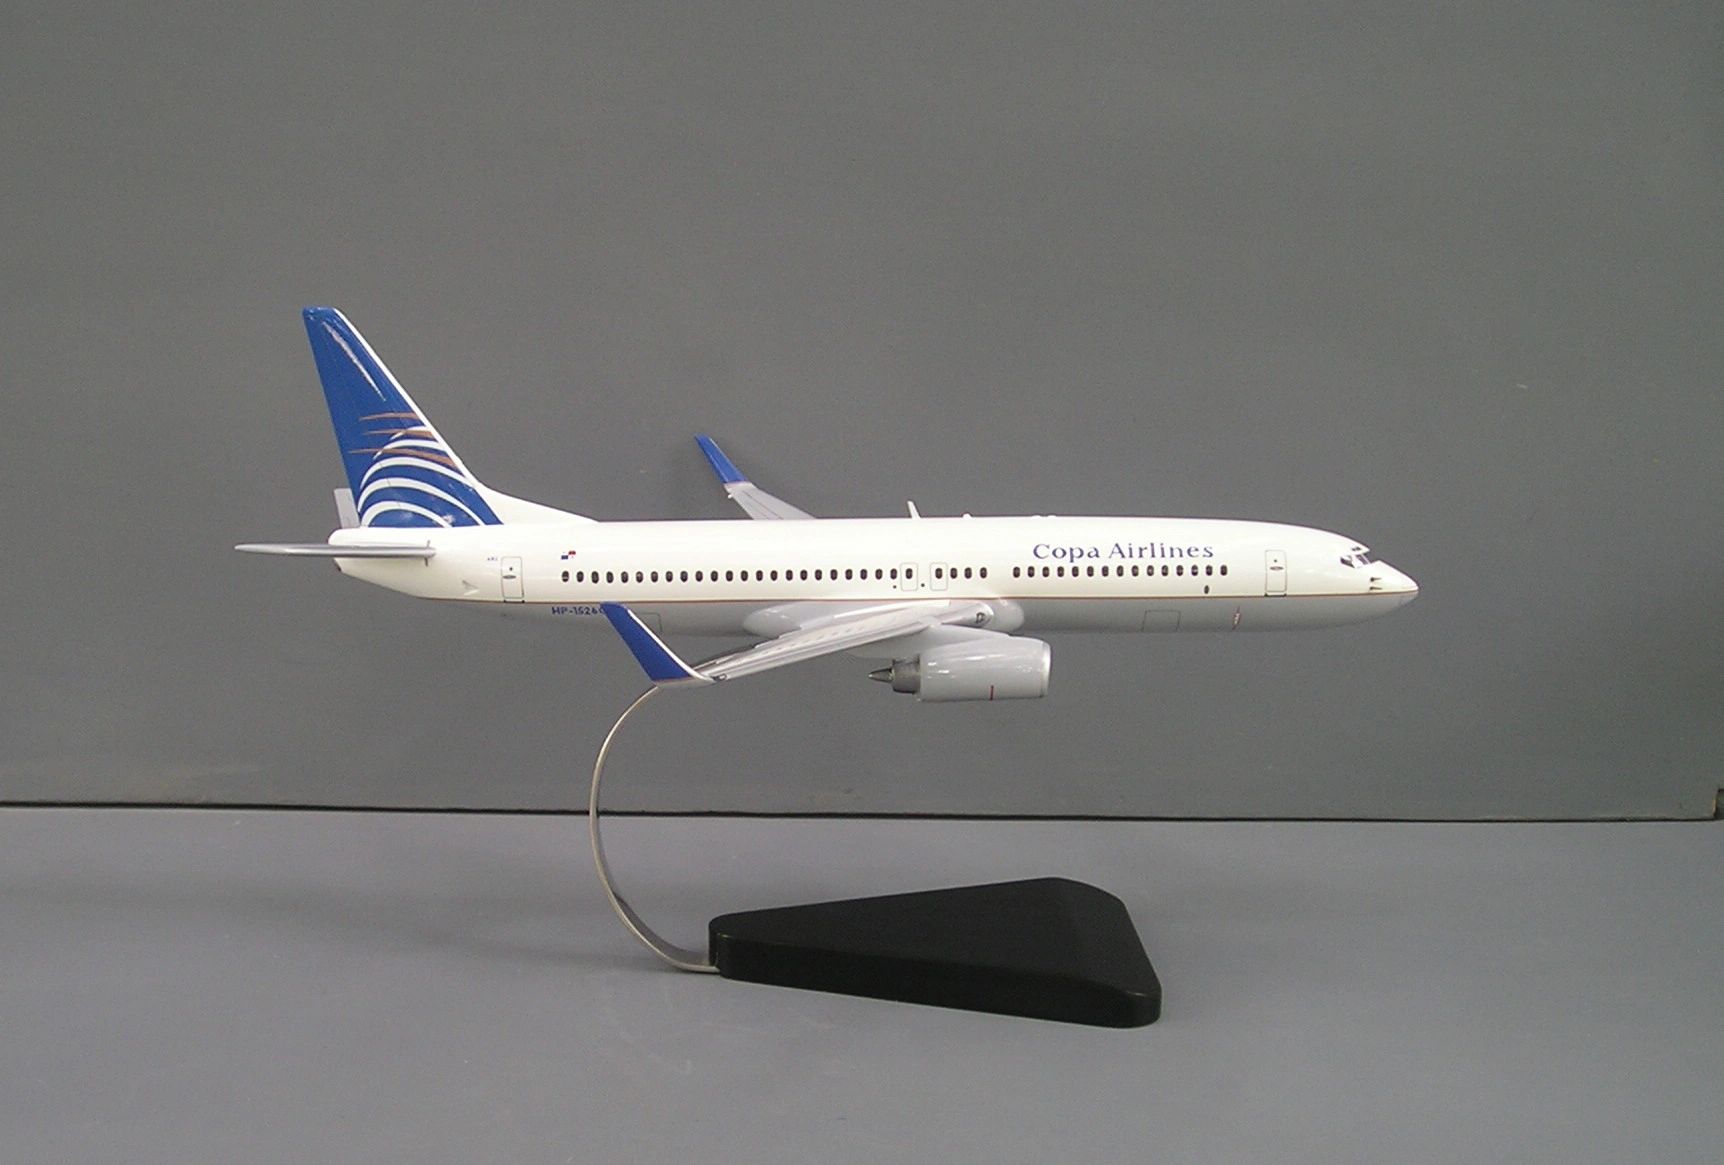 Boeing 737-800 desktop models